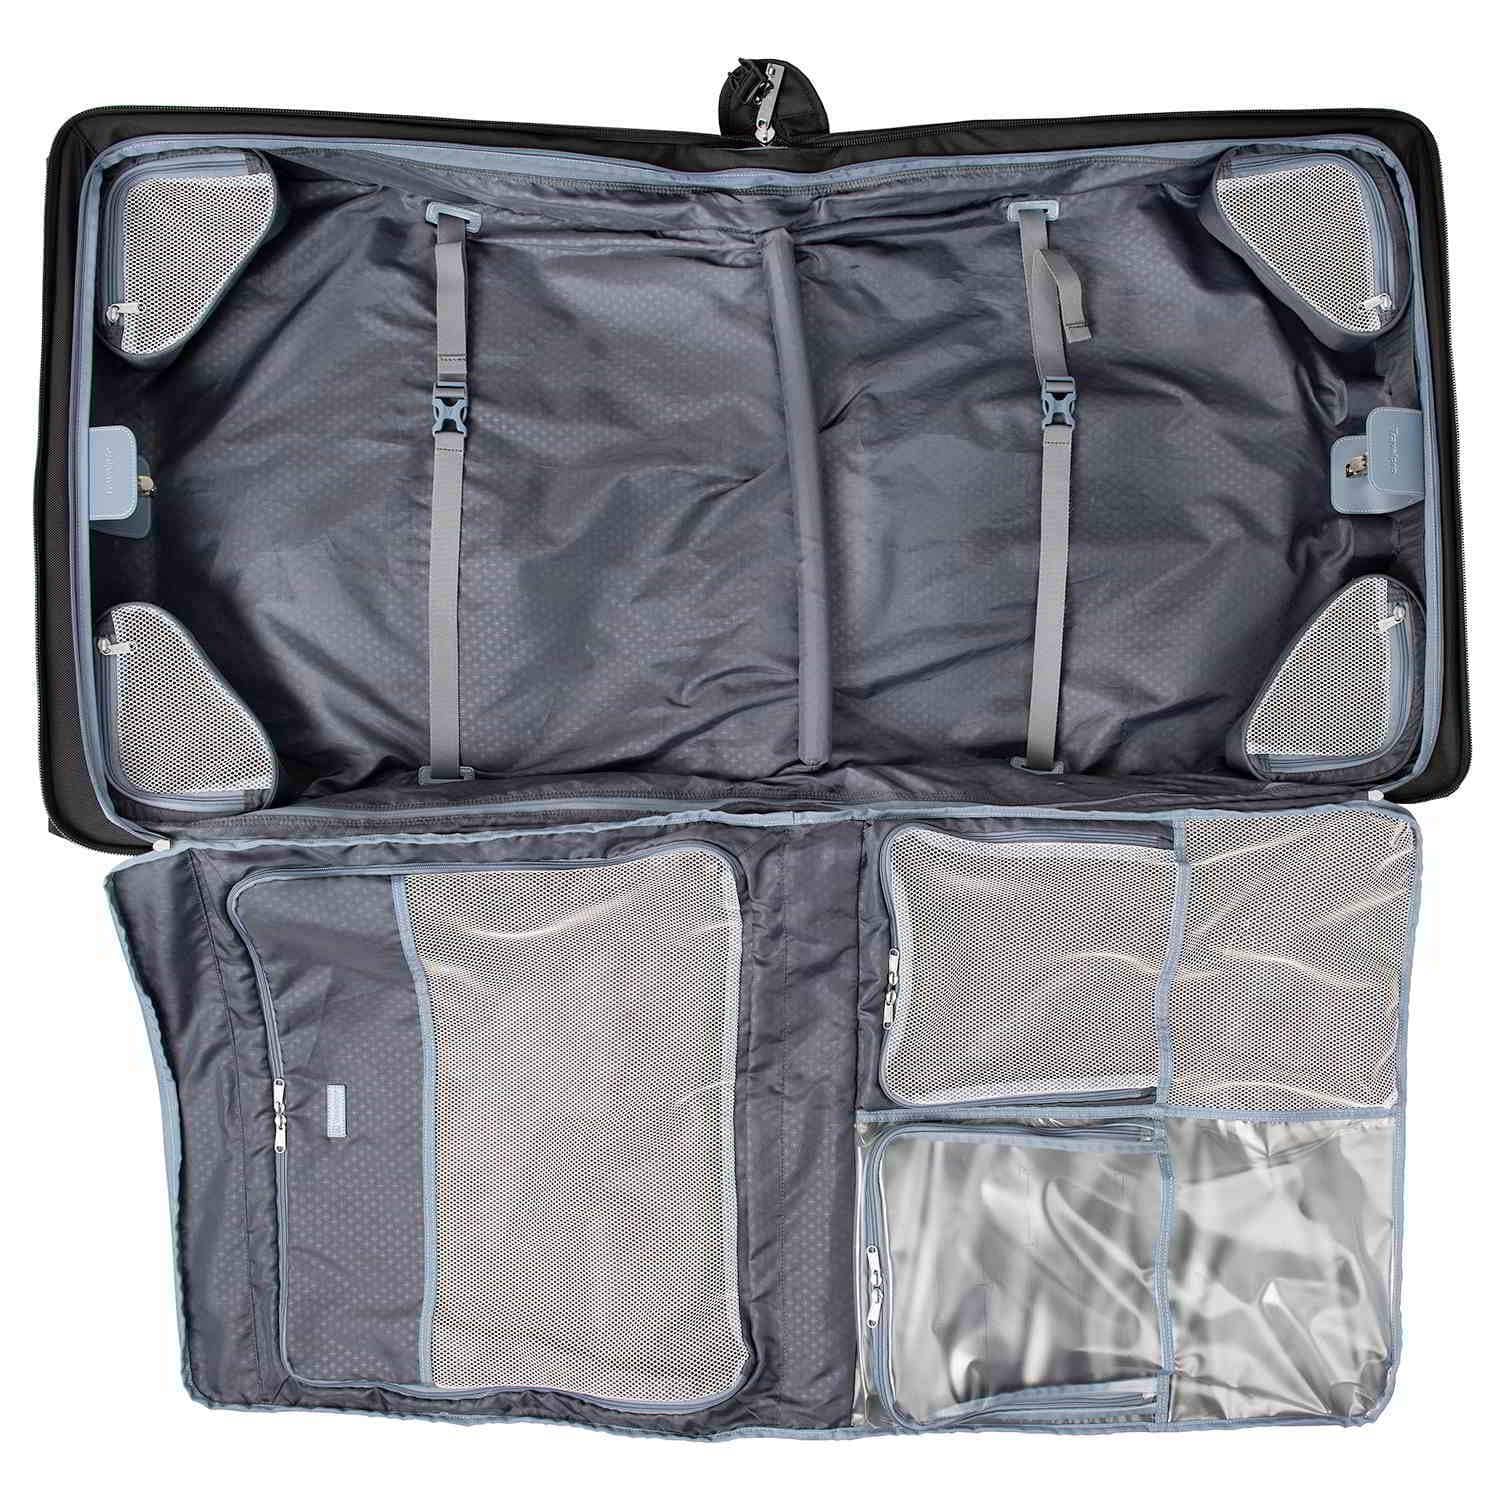 50Garment Bags For Travel,Garment Bag Suit Bags For Men Closet  Storage,Gusseted Travel Garment Bag With Zipper Pocket,Garment Bags For  Hanging